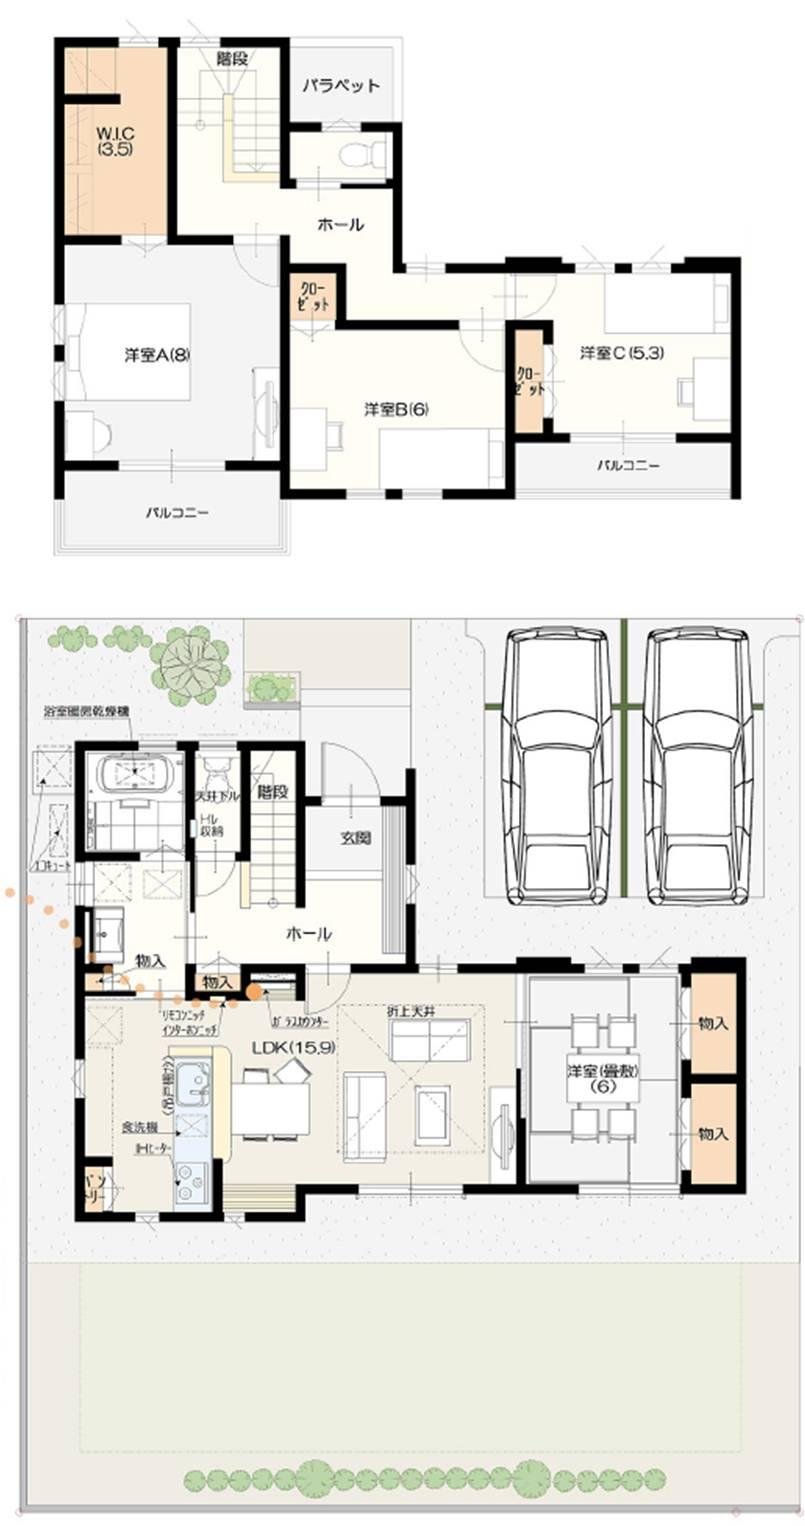 Floor plan. (No. 10 locations), Price 26,800,000 yen, 4LDK, Land area 189.6 sq m , Building area 111.79 sq m